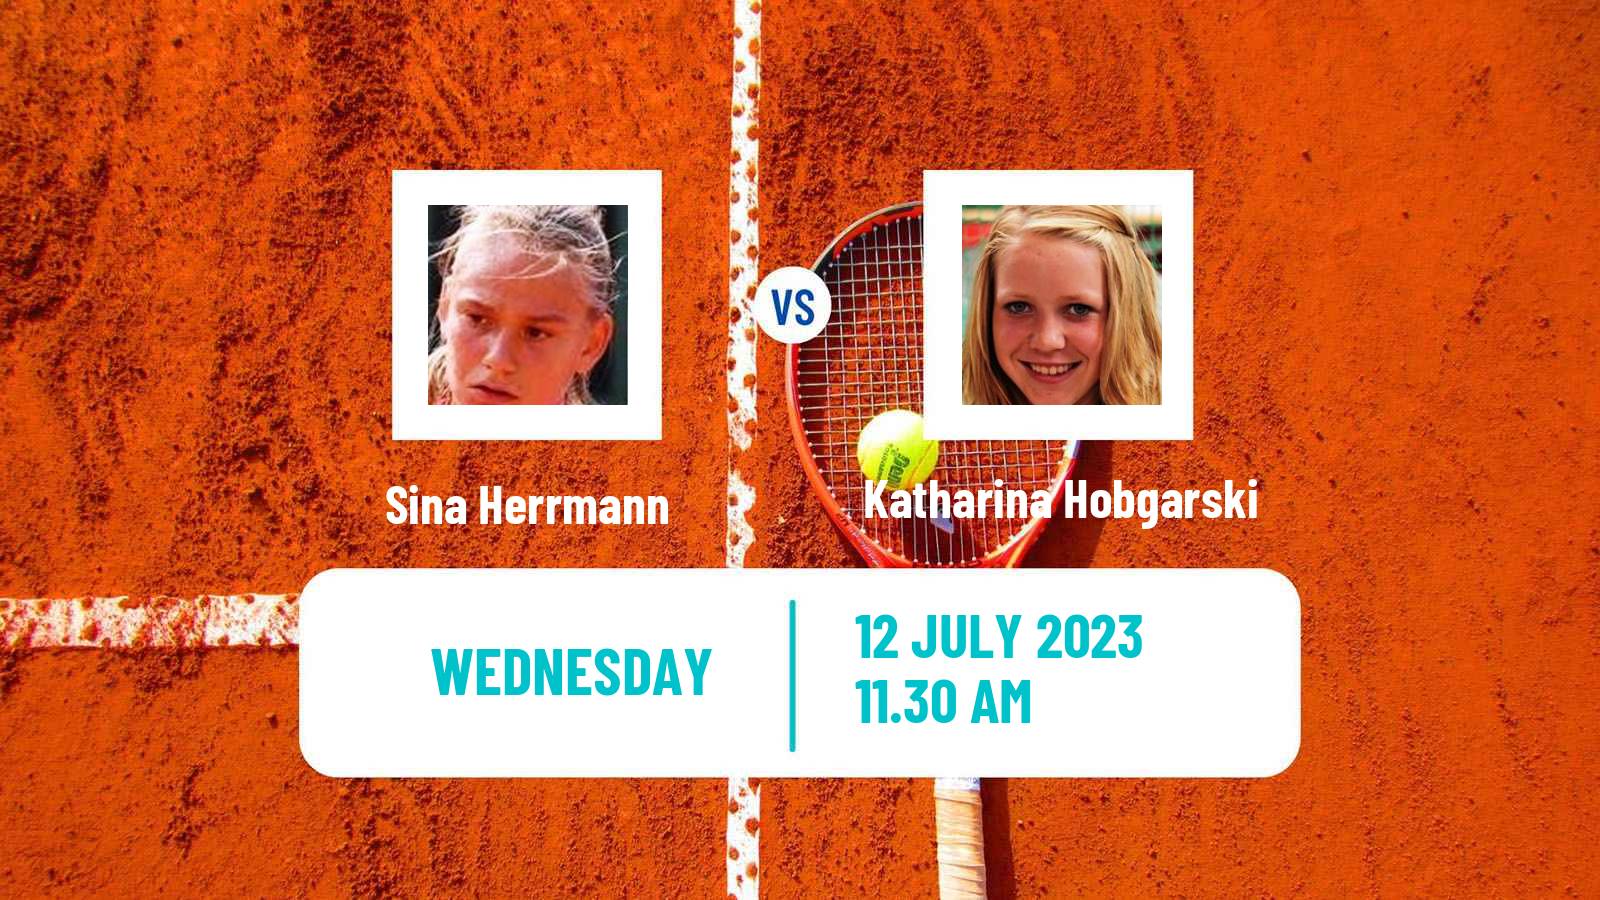 Tennis ITF W25 Aschaffenburg Women Sina Herrmann - Katharina Hobgarski